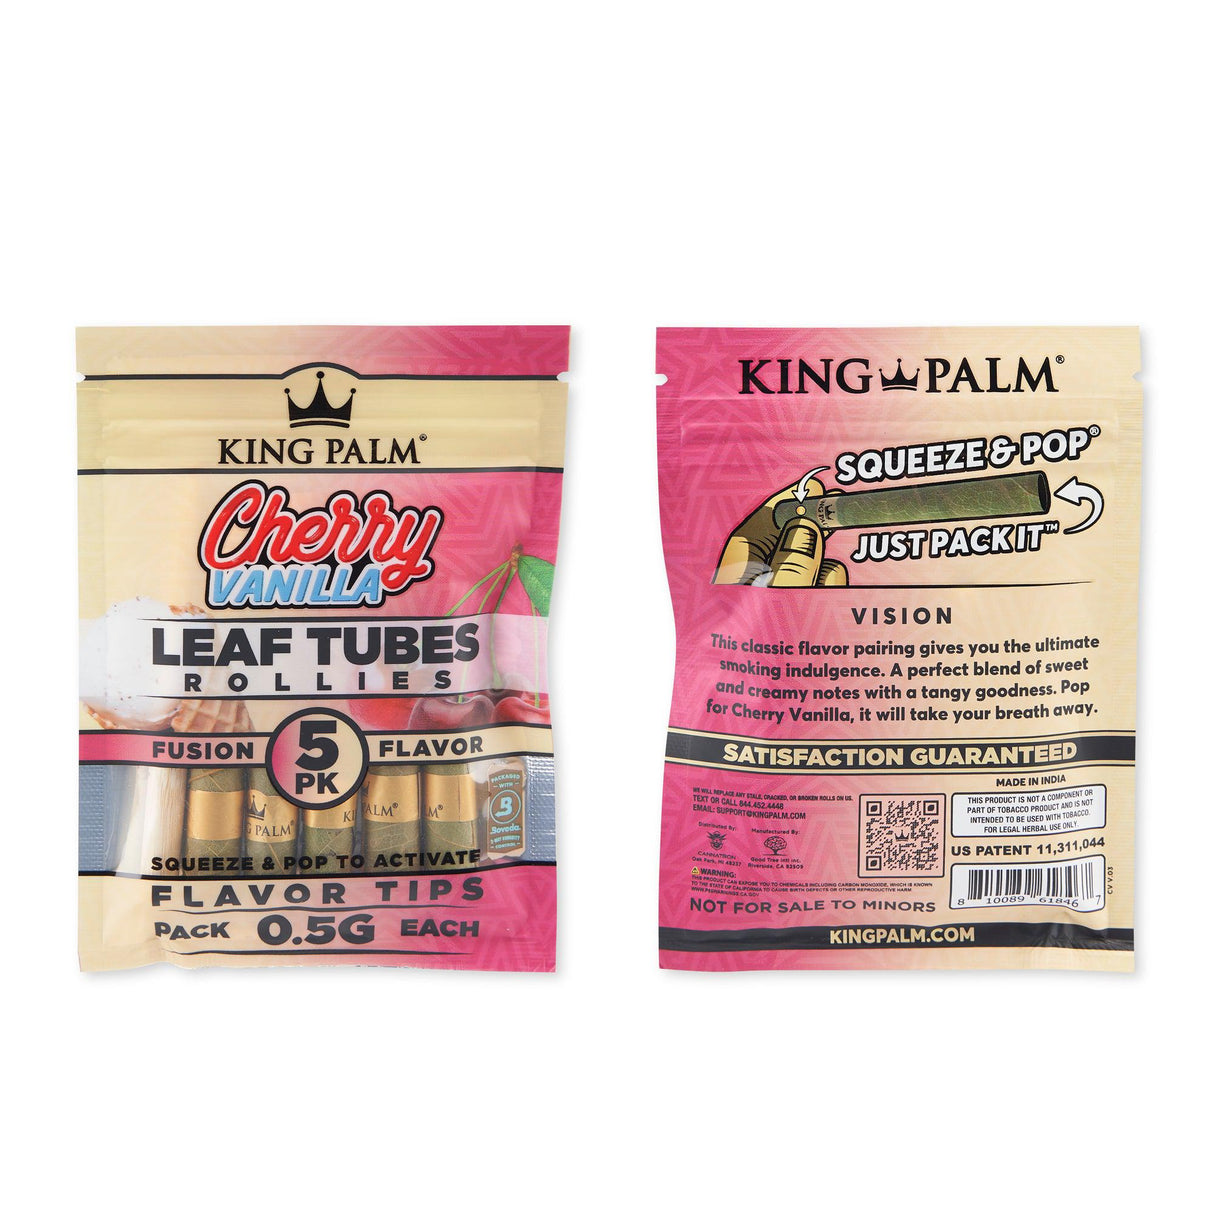 King Palm 5pk Rollie Flavored Leaf Tubes – 15ct Display